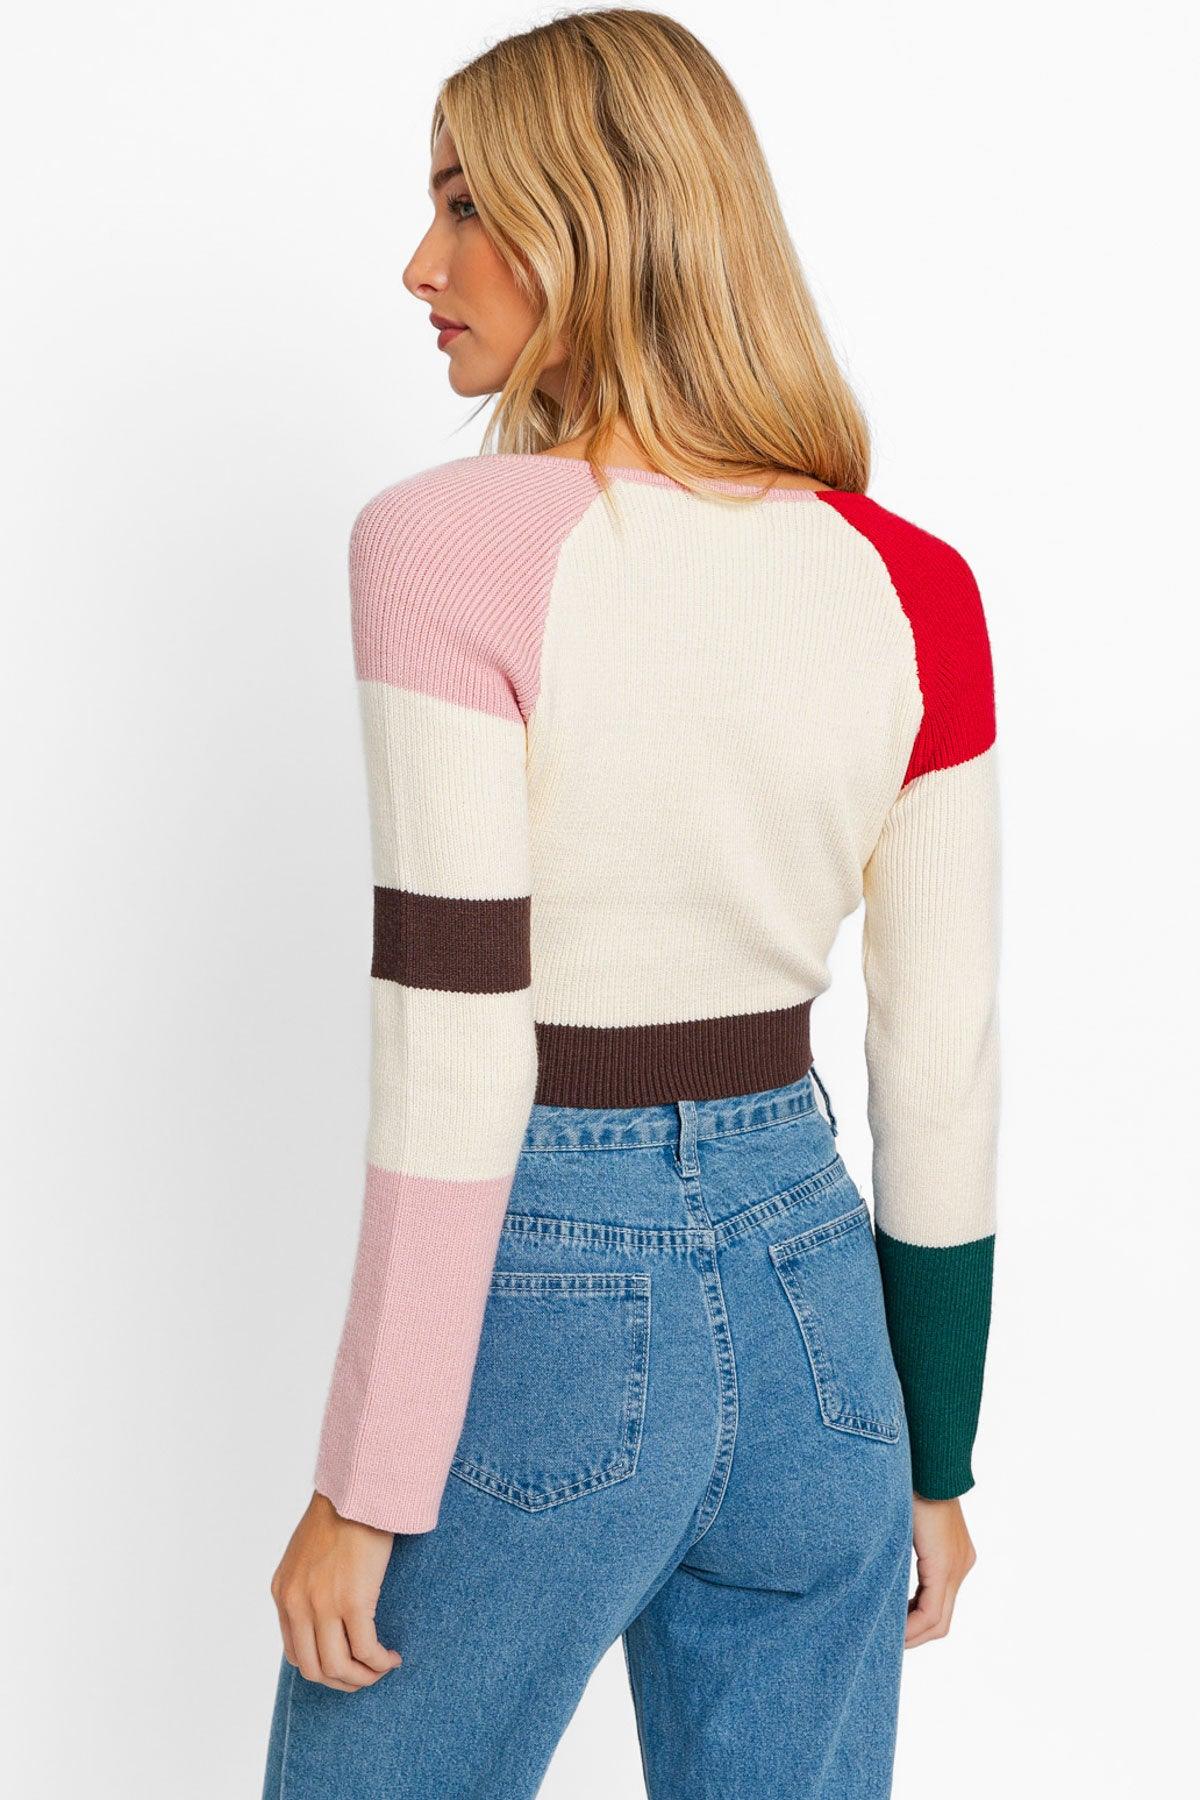 Long Sleeve Color Block Crop Stripe Knit Top - Tasha Apparel Wholesale